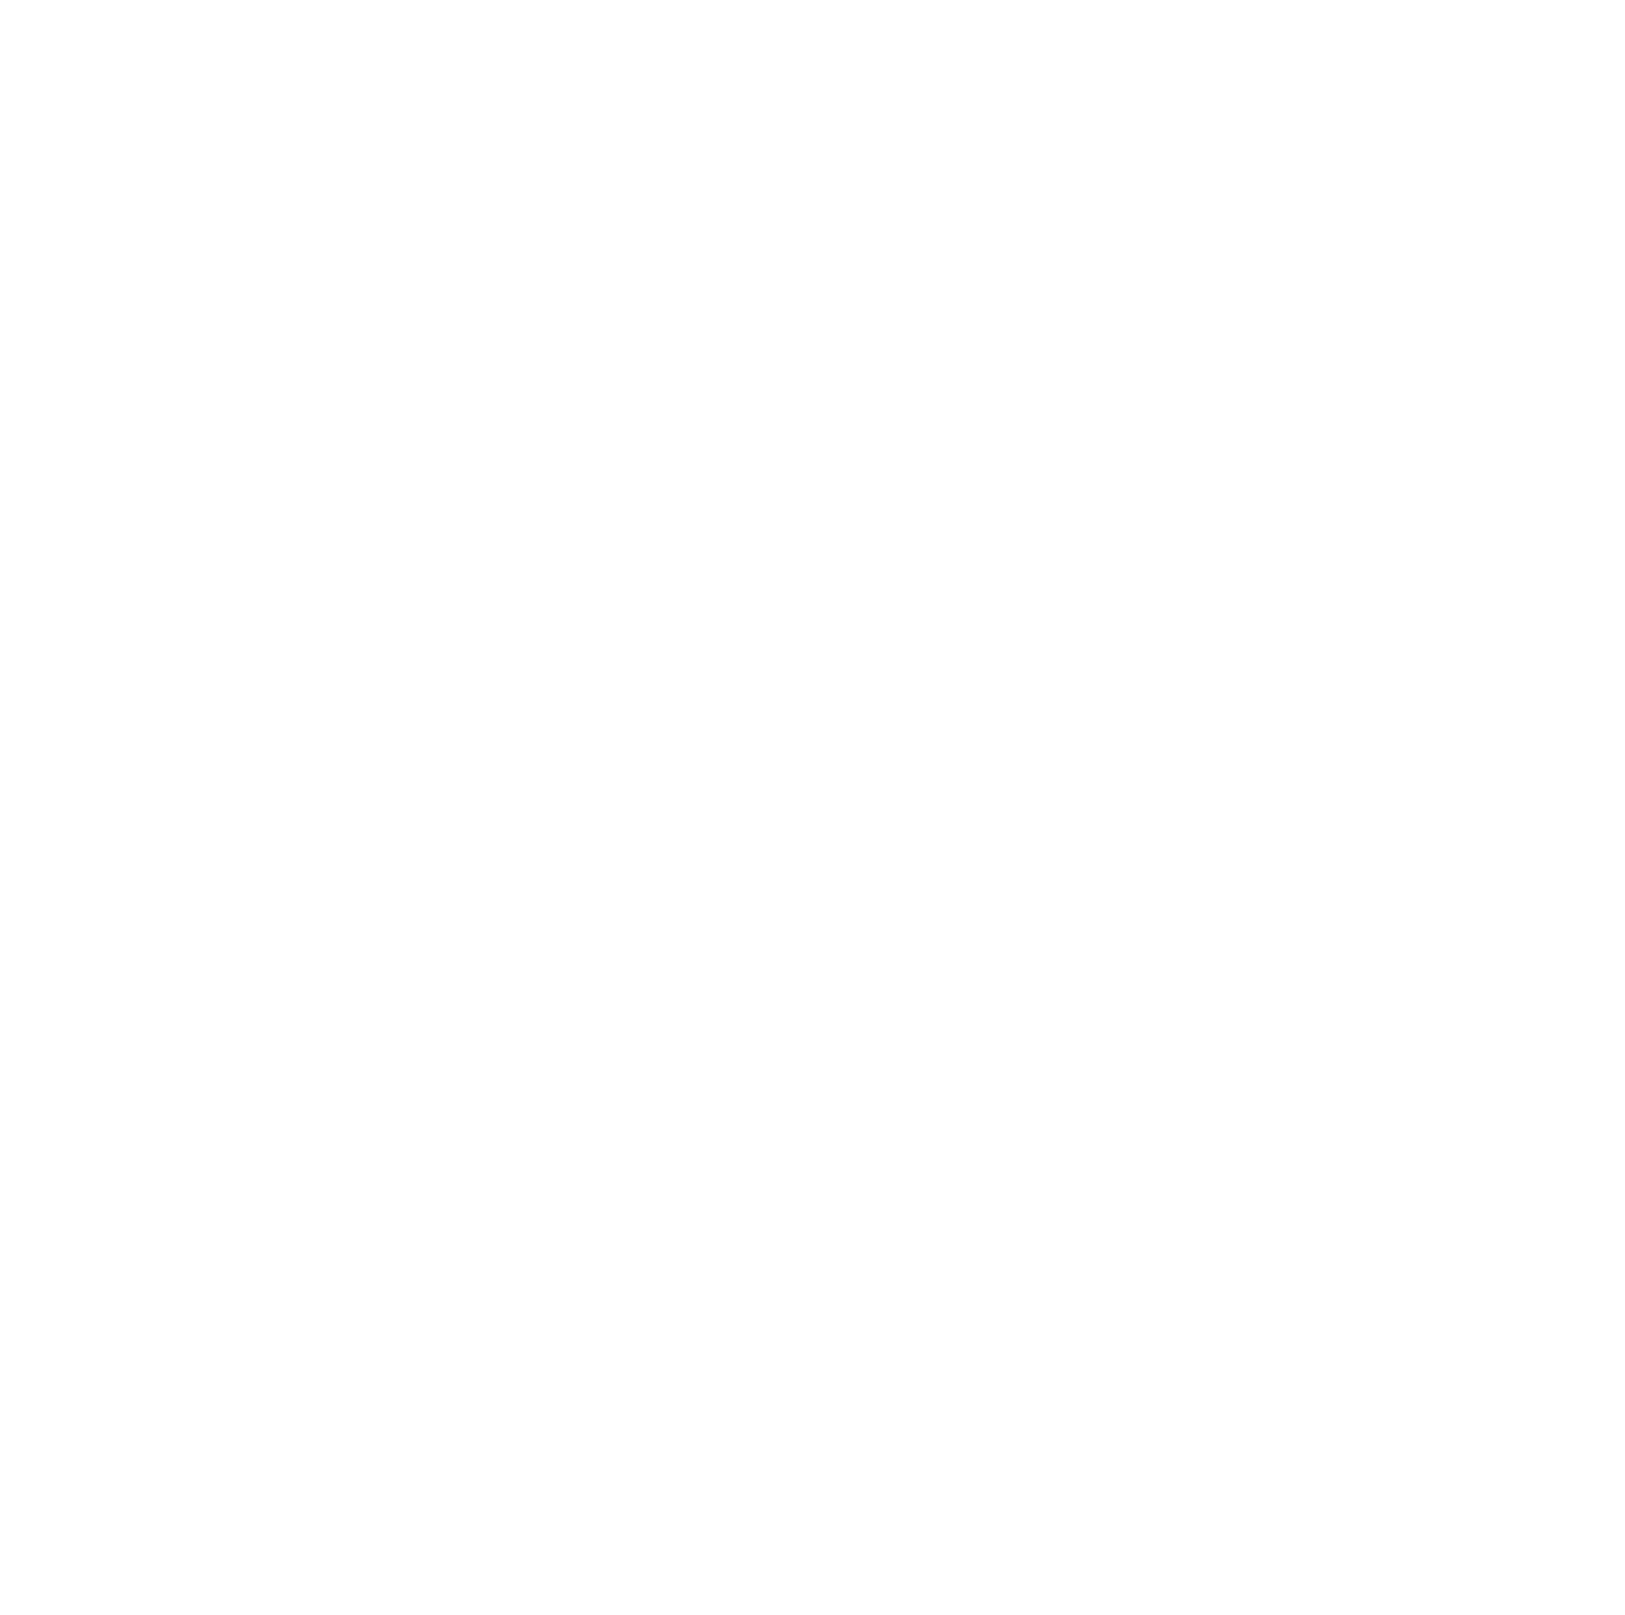 Sanmina logo for dark backgrounds (transparent PNG)